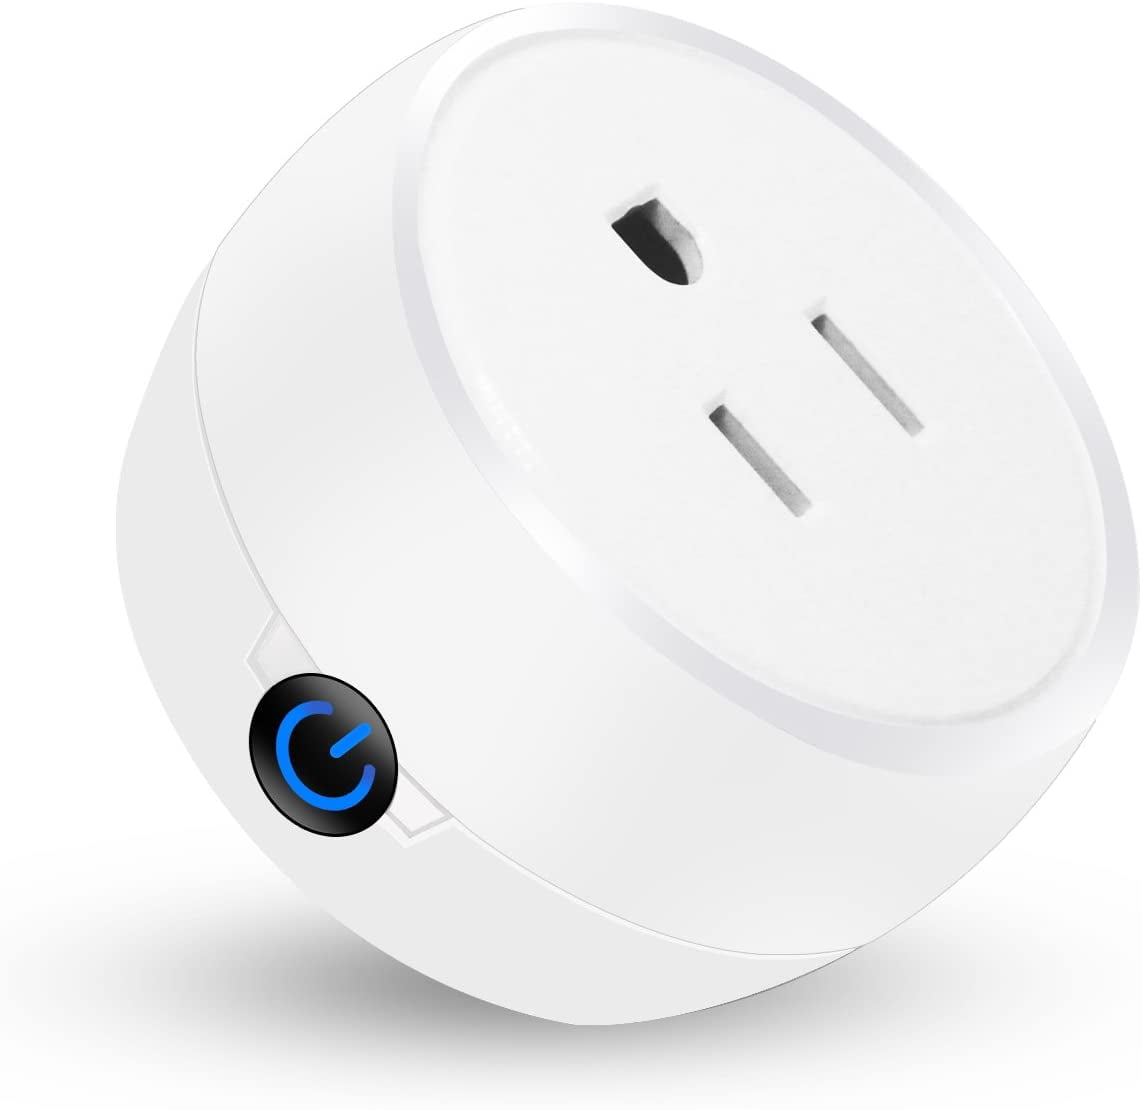 Smart Plug, WGGE Mini Smart WiFi Outlet Compatible with Alexa